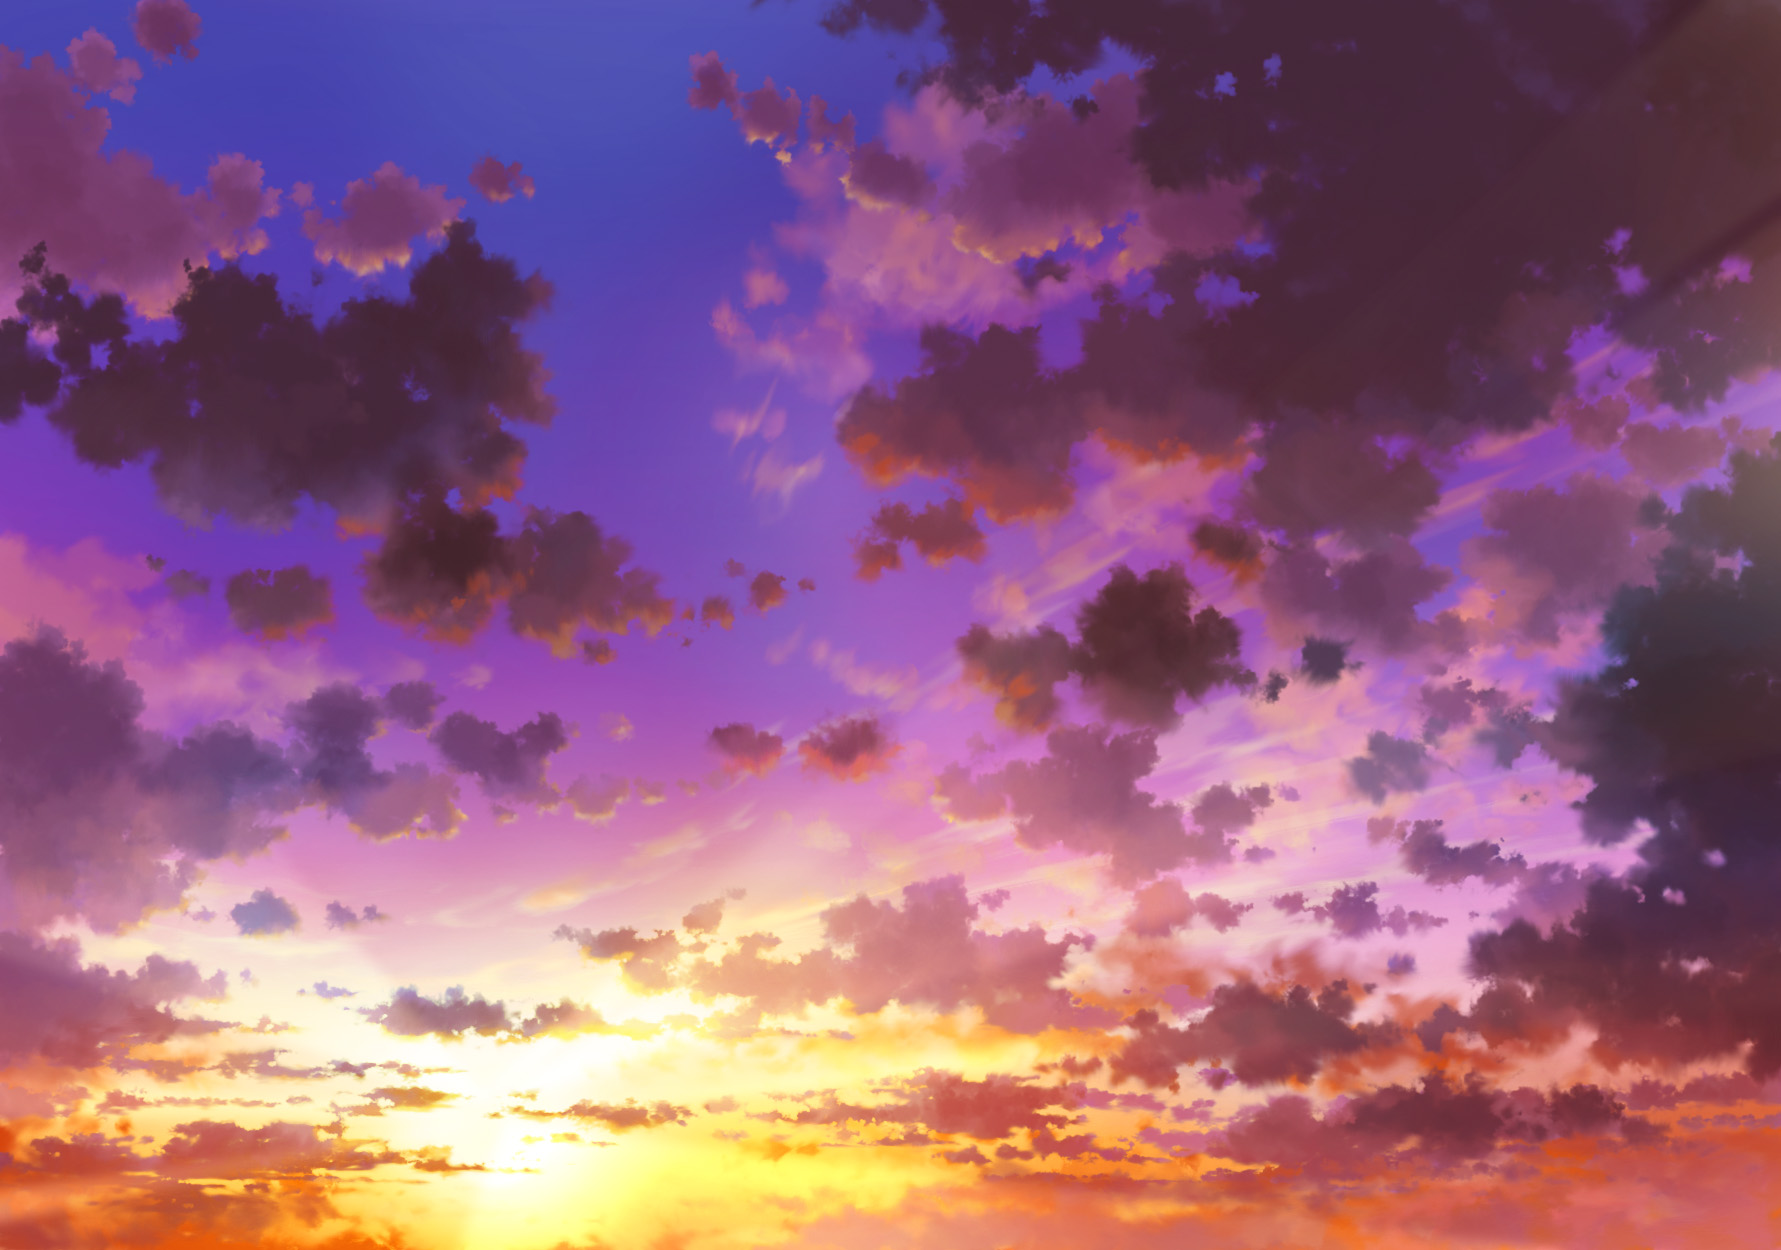 ArtStation - Anime style night sky